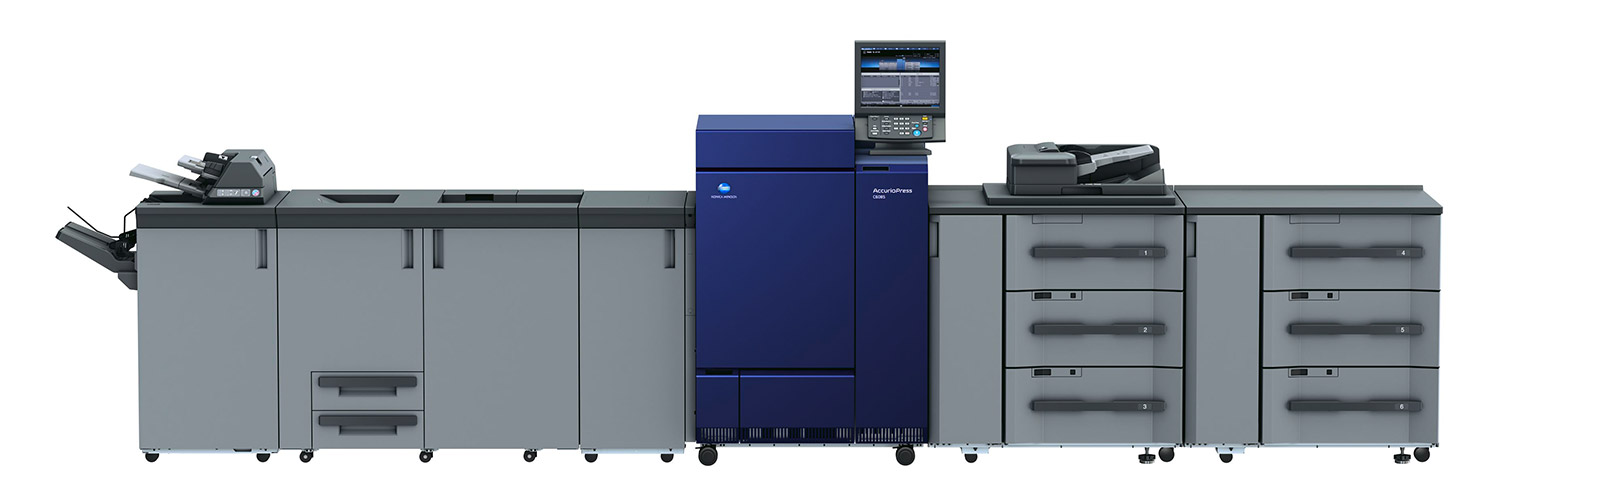 Konica Minolta AccurioPress C6085 Production Print System